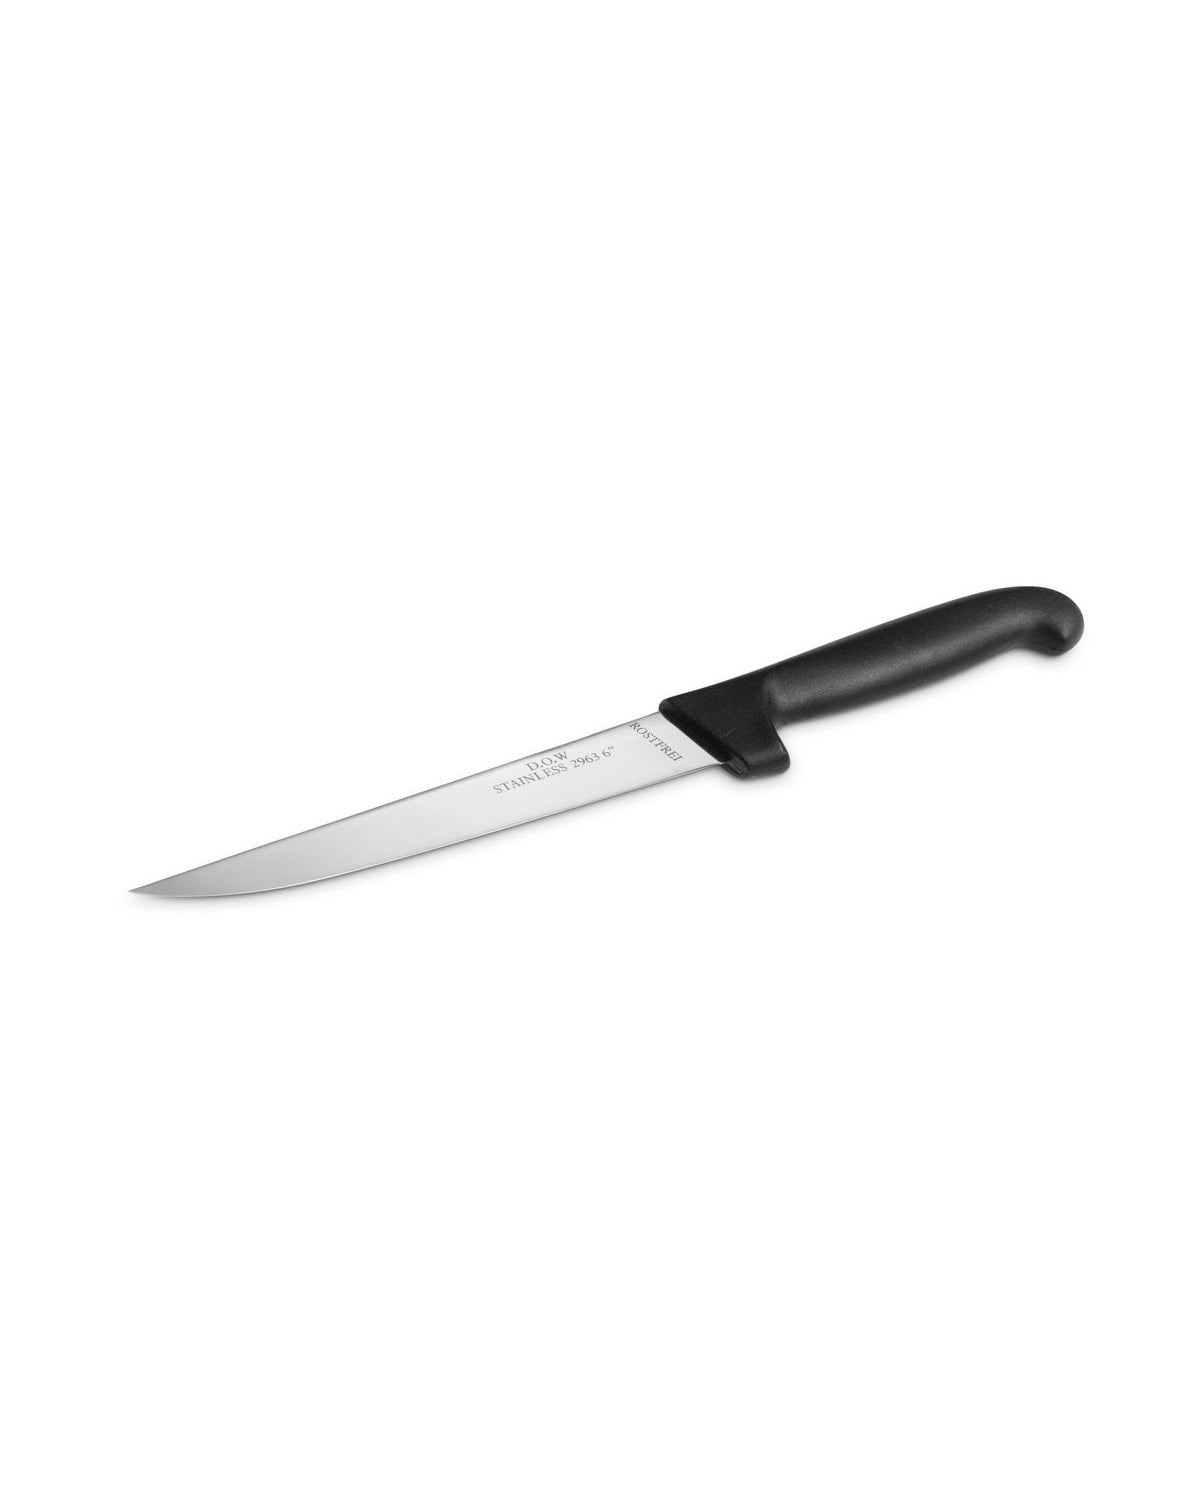 Boning Knife - 15cm Blade (6inch)